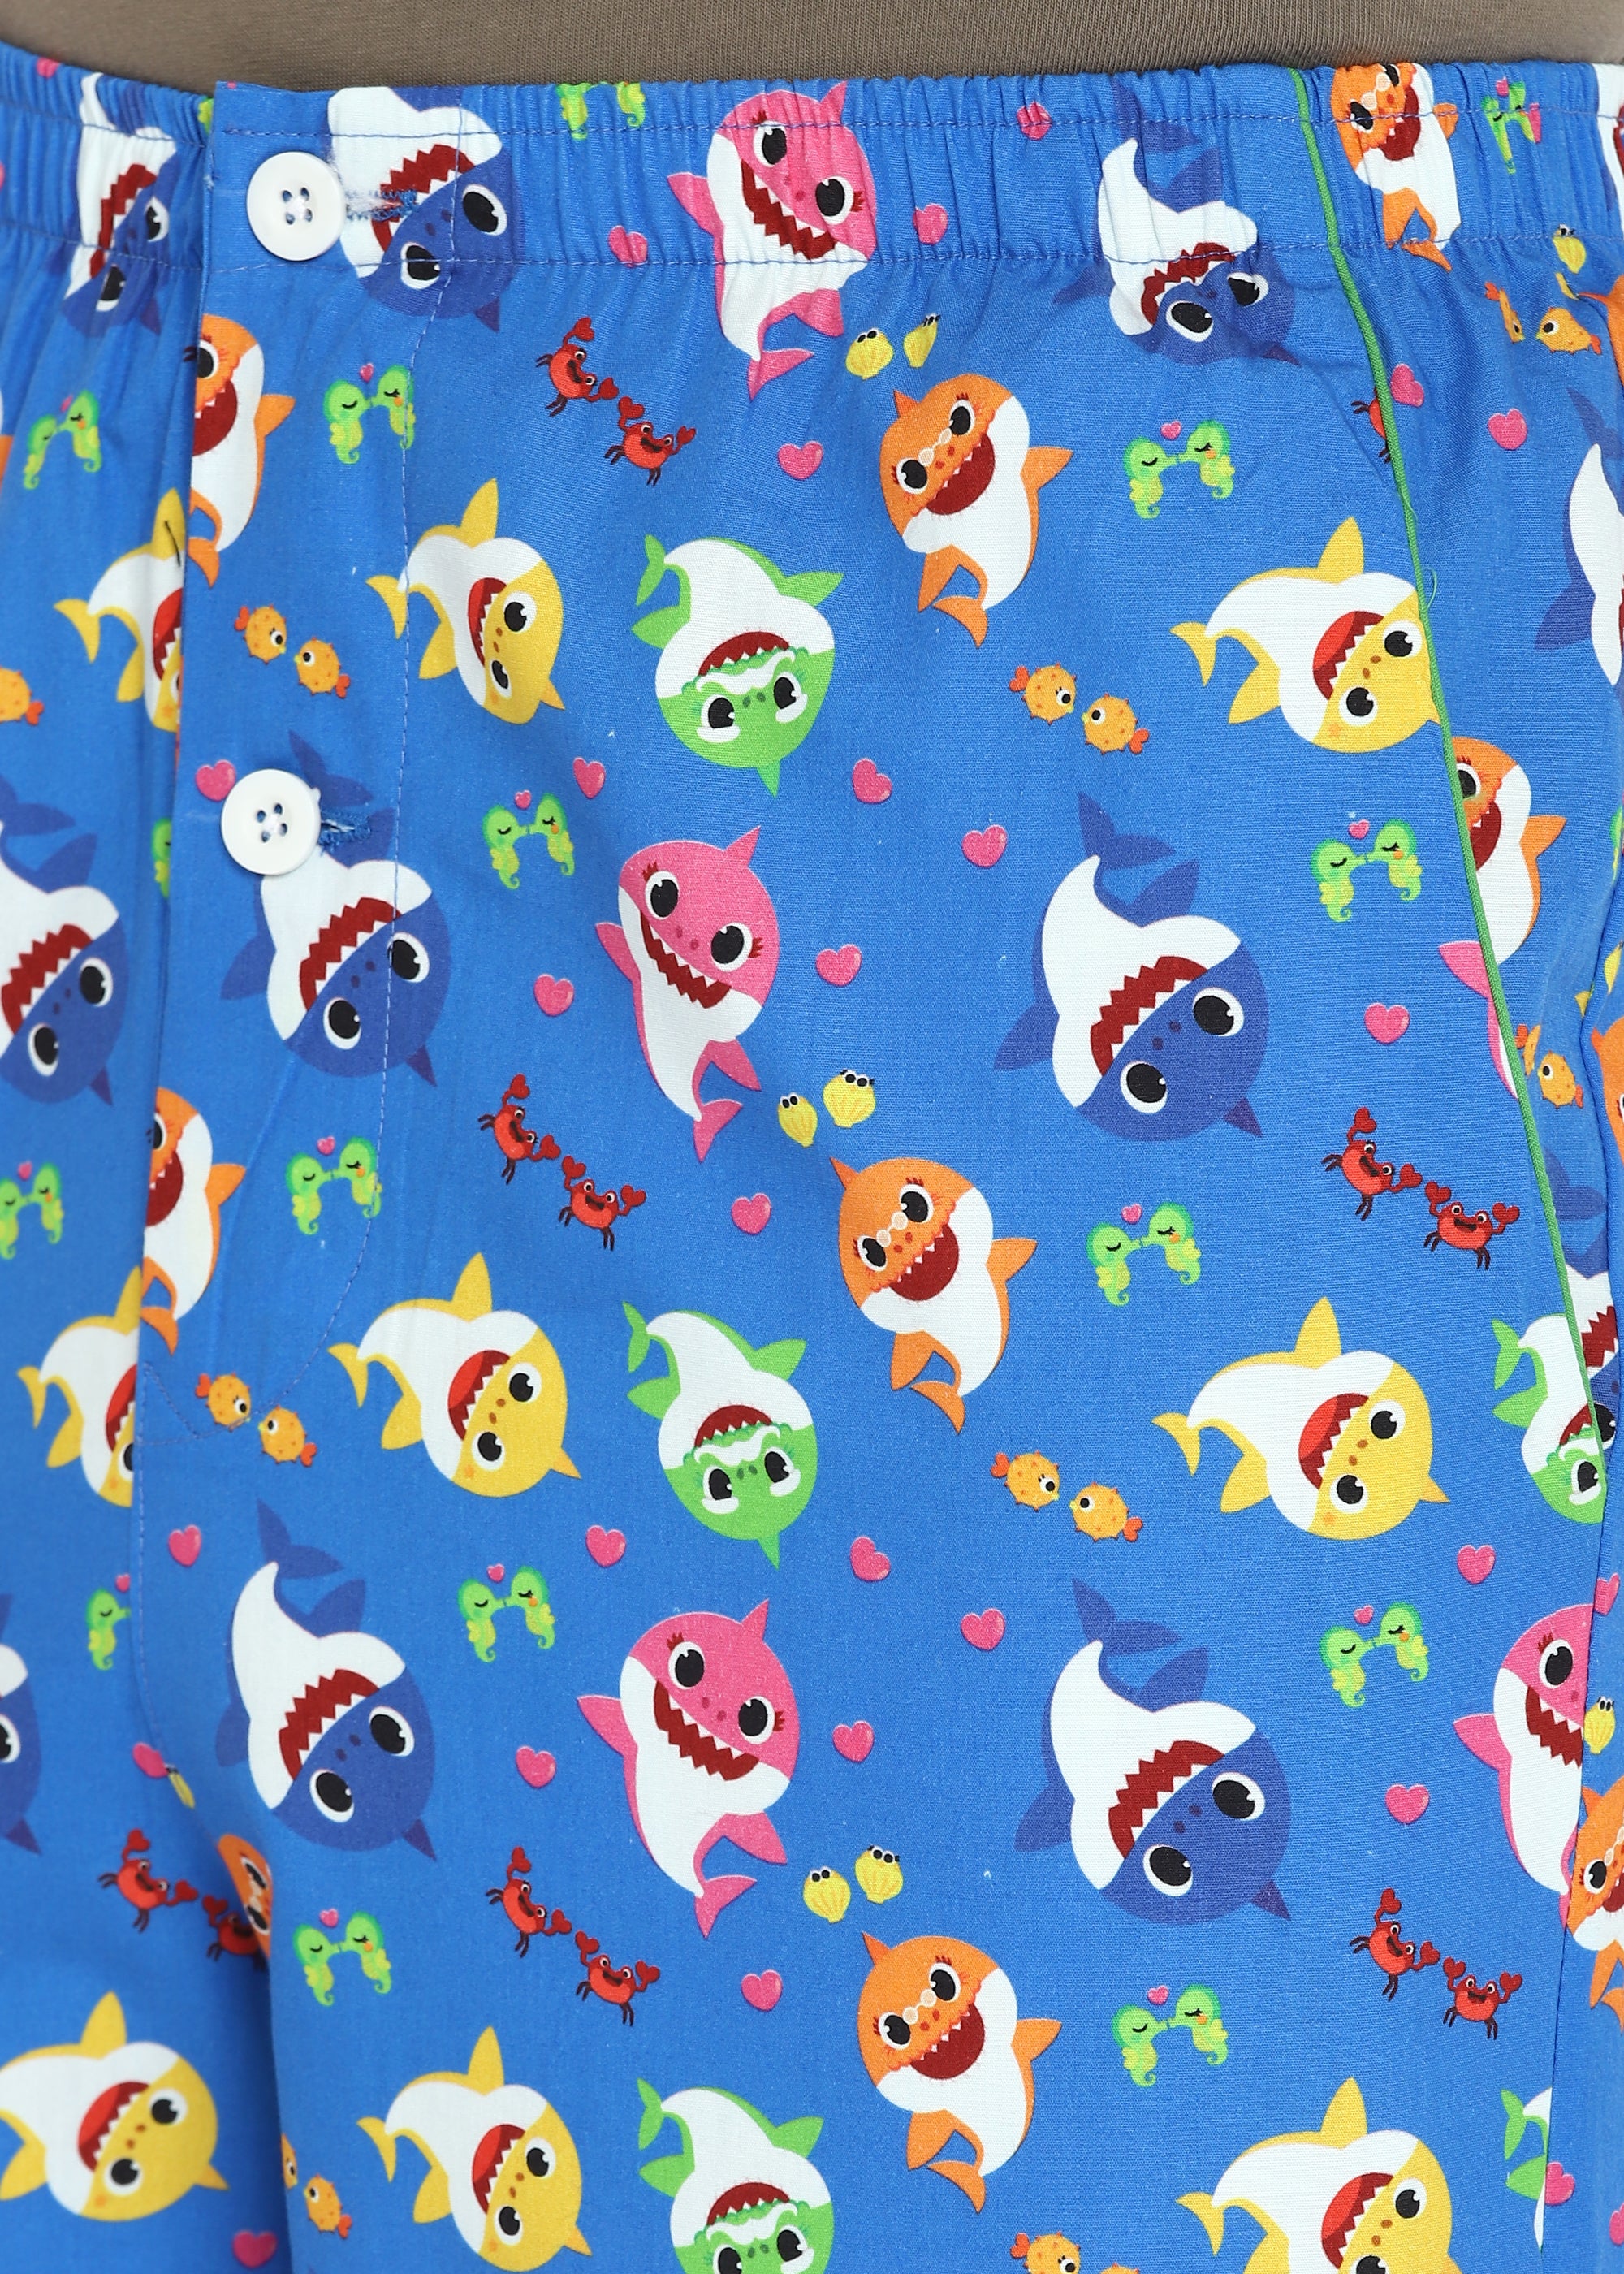 Baby Shark Blue Print Men's Pyjama - Shopbloom